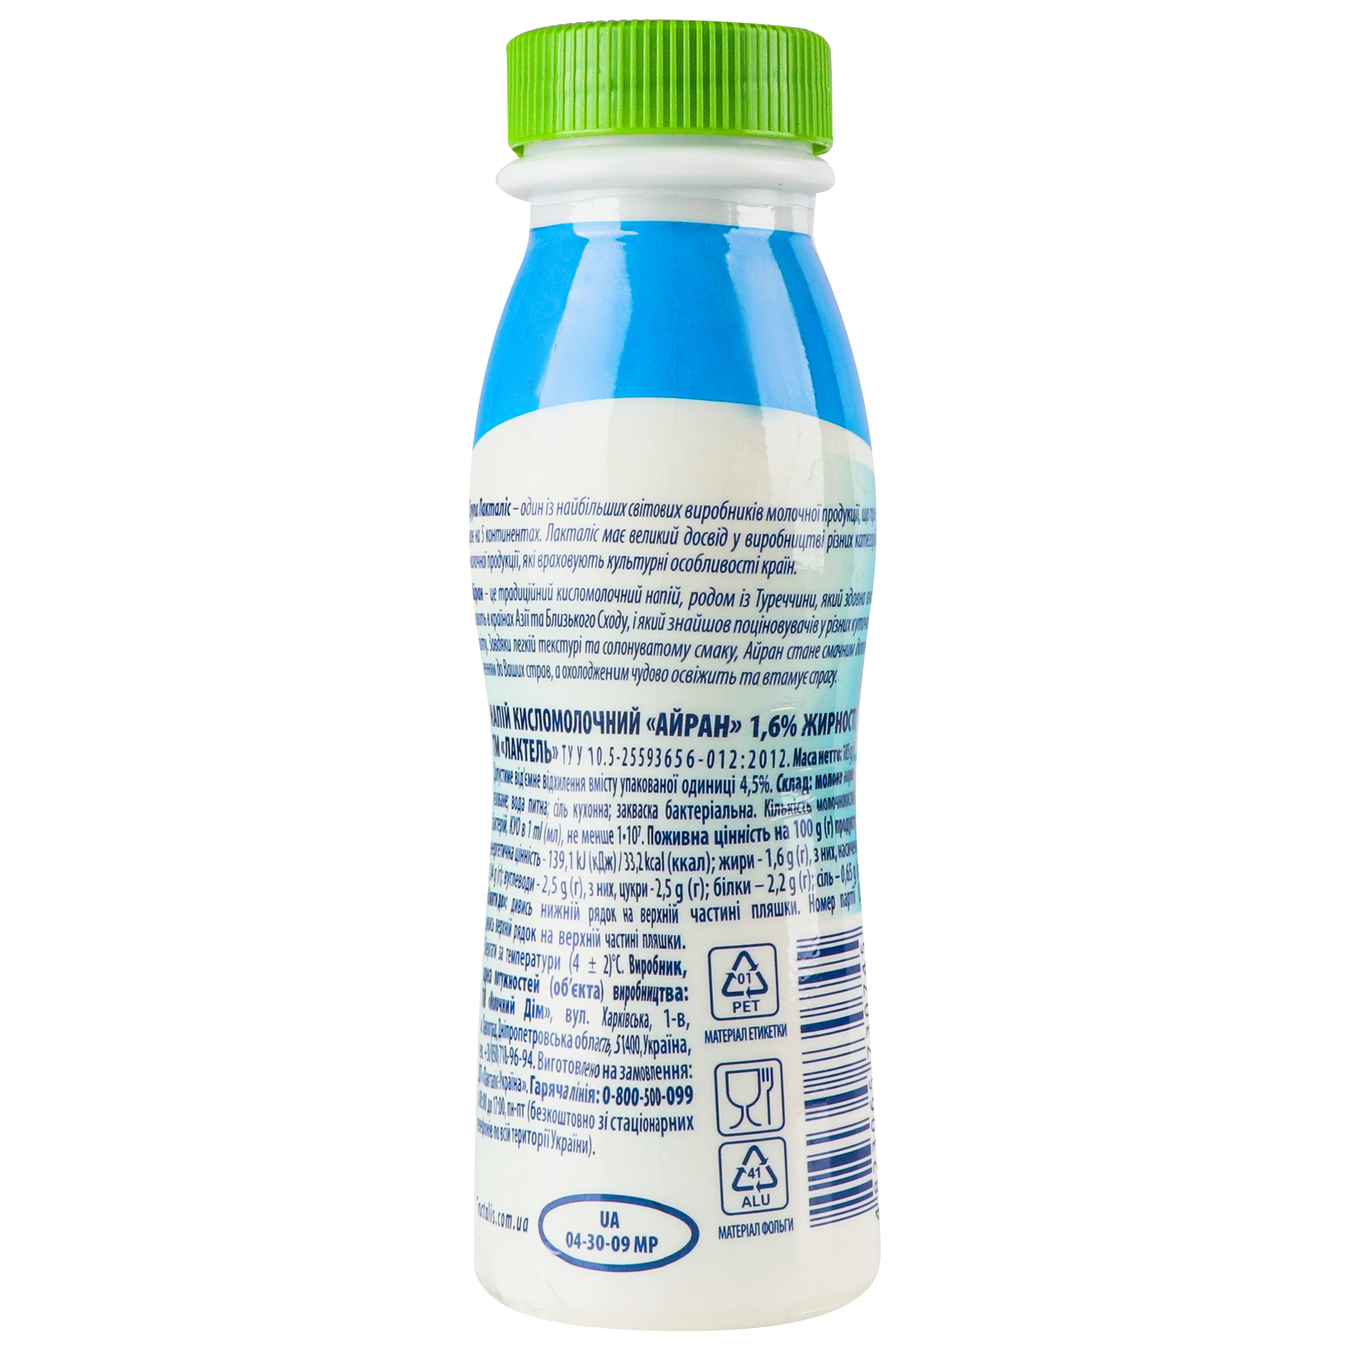 Fermented milk drink Lactel Ayran drinking bottle 1.6% 185g 2